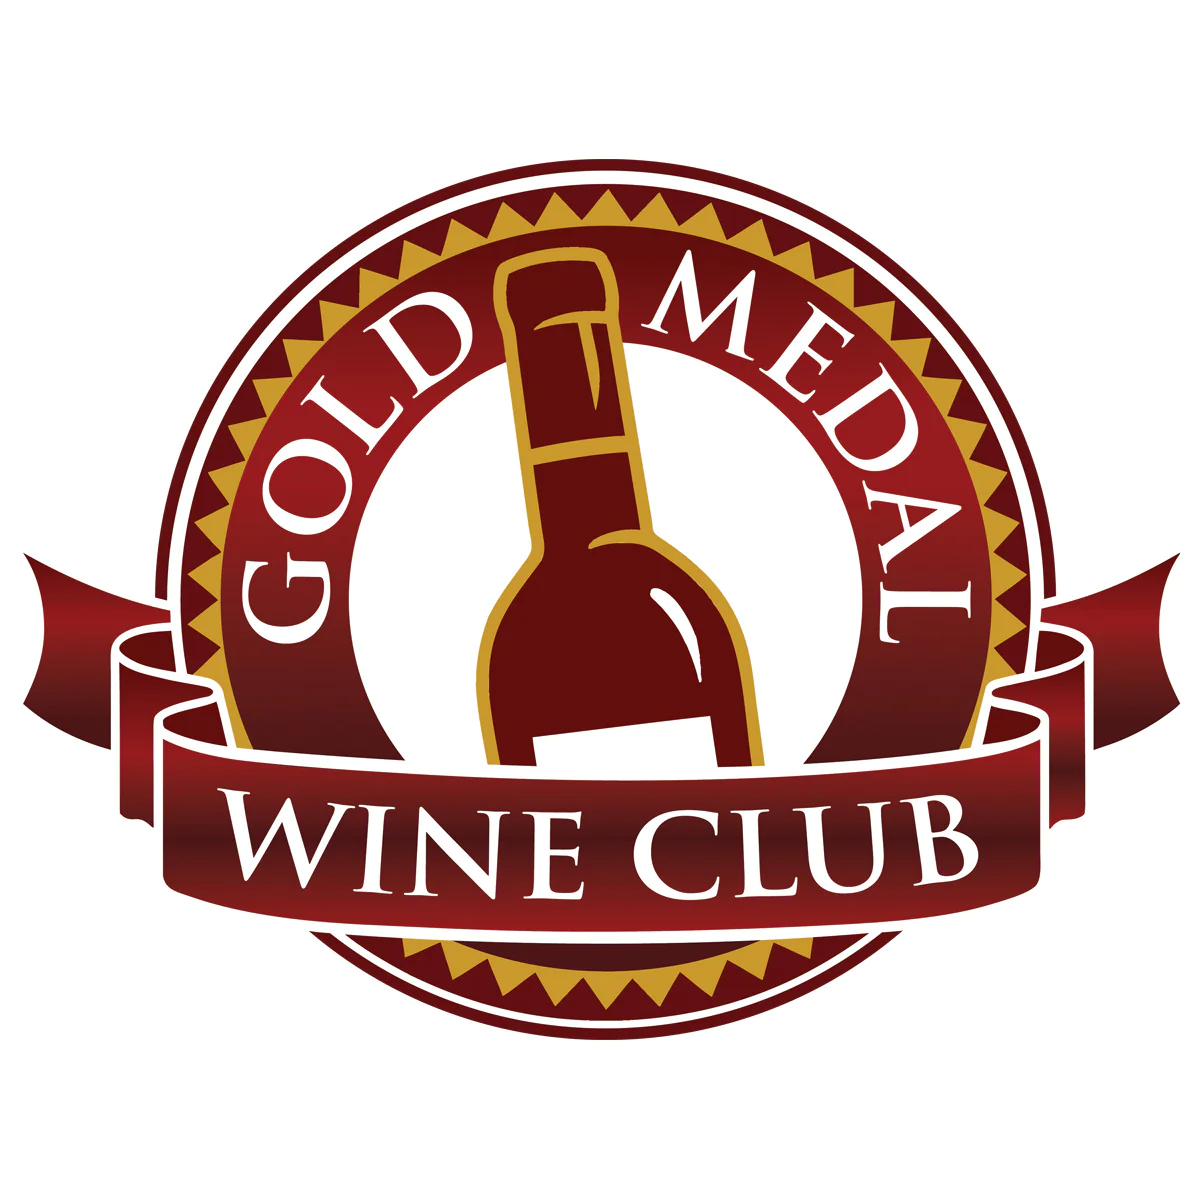 Email Breakdown #69: Gold Medal Wine Club